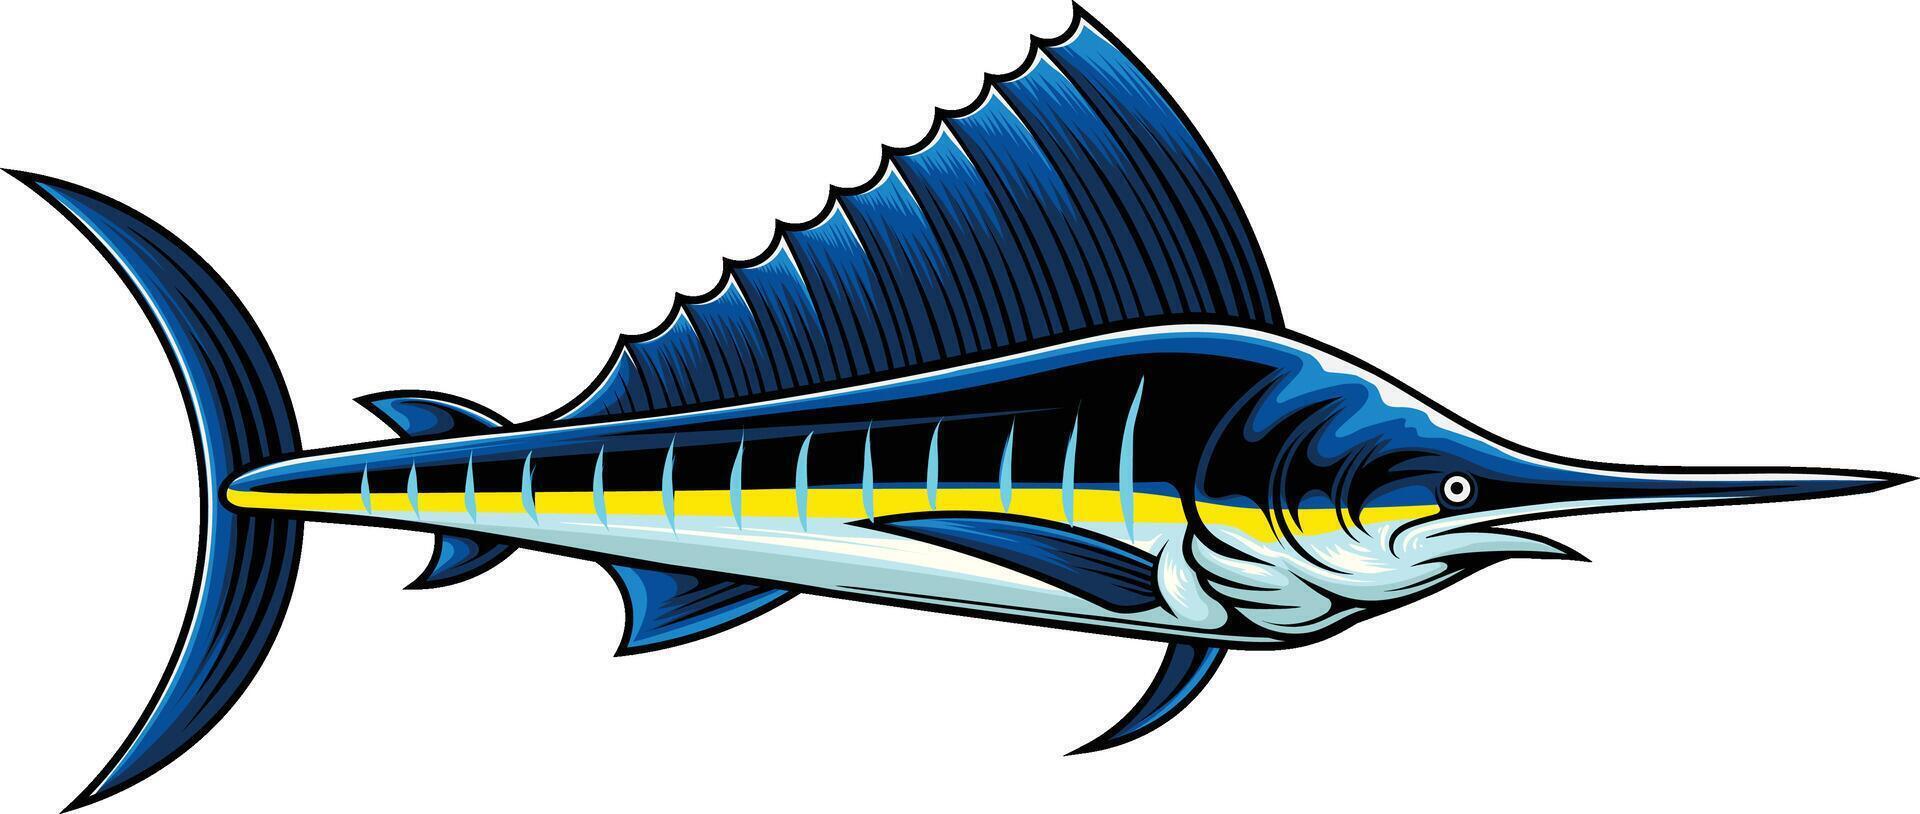 vector illustration of swordfish for fisihing badge